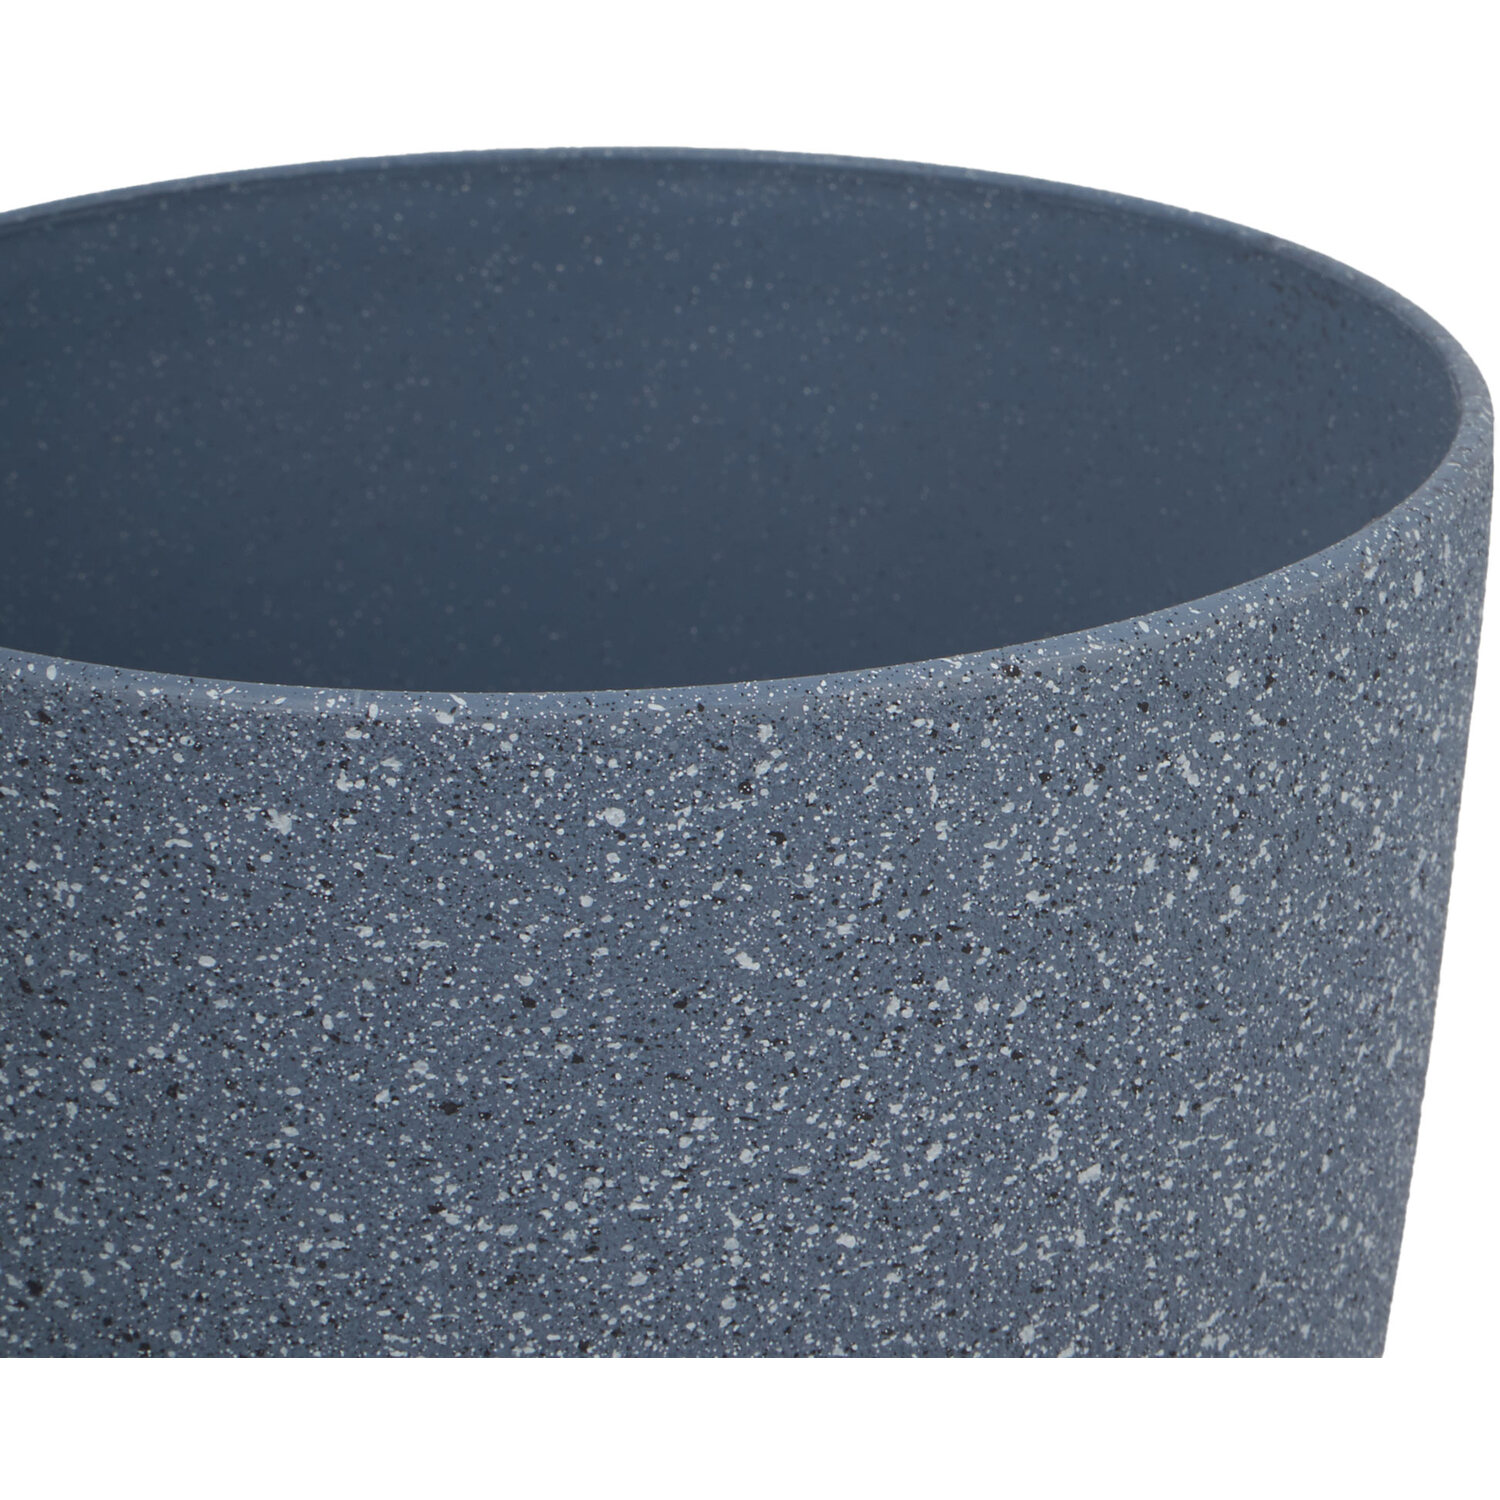 Grey Textured Plastic Plant Pot 18cm Image 2